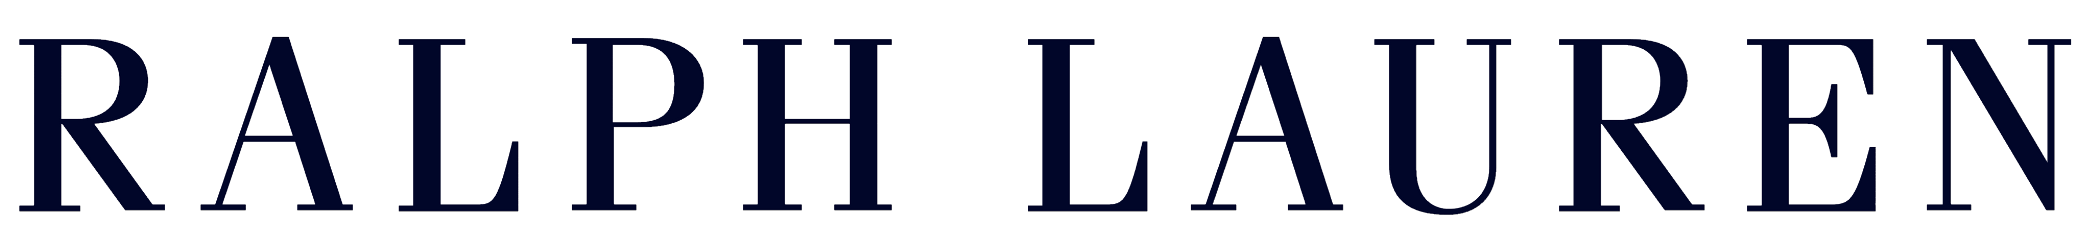 Ralph Lauren Logo png